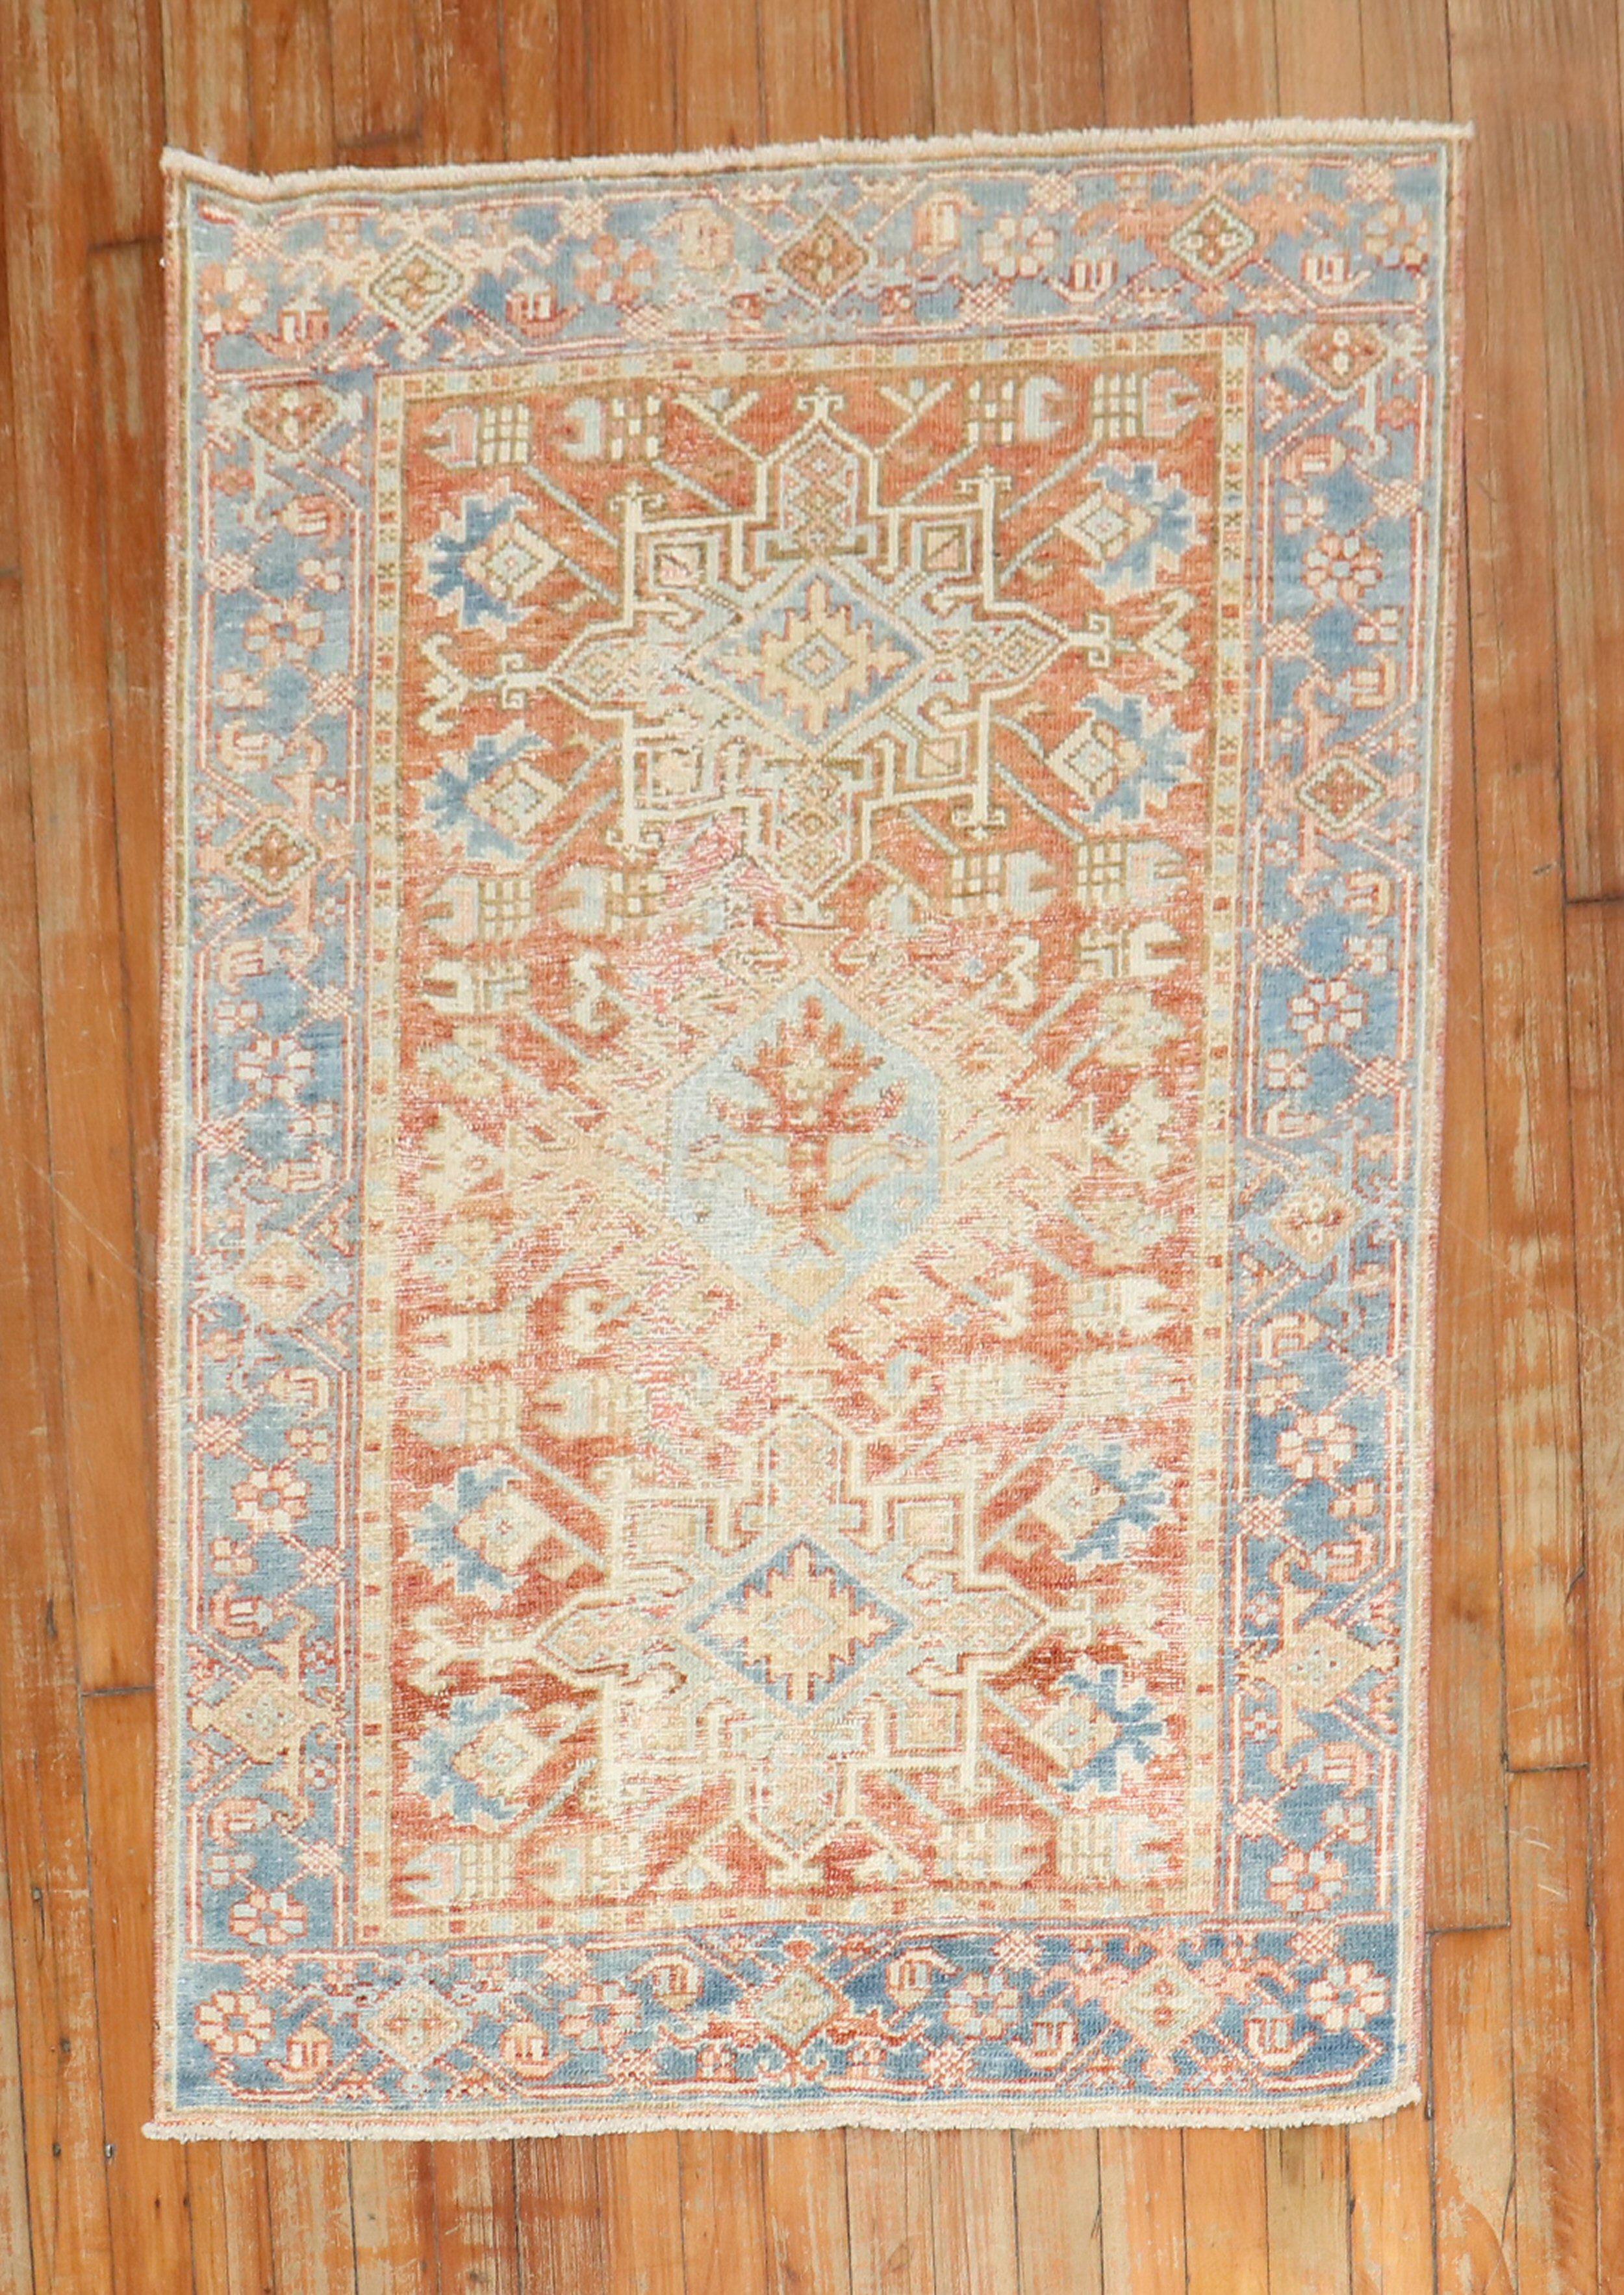 Antique worn heriz rug in Terracotta & blue

Measure: 2'11'' x 4'1''.